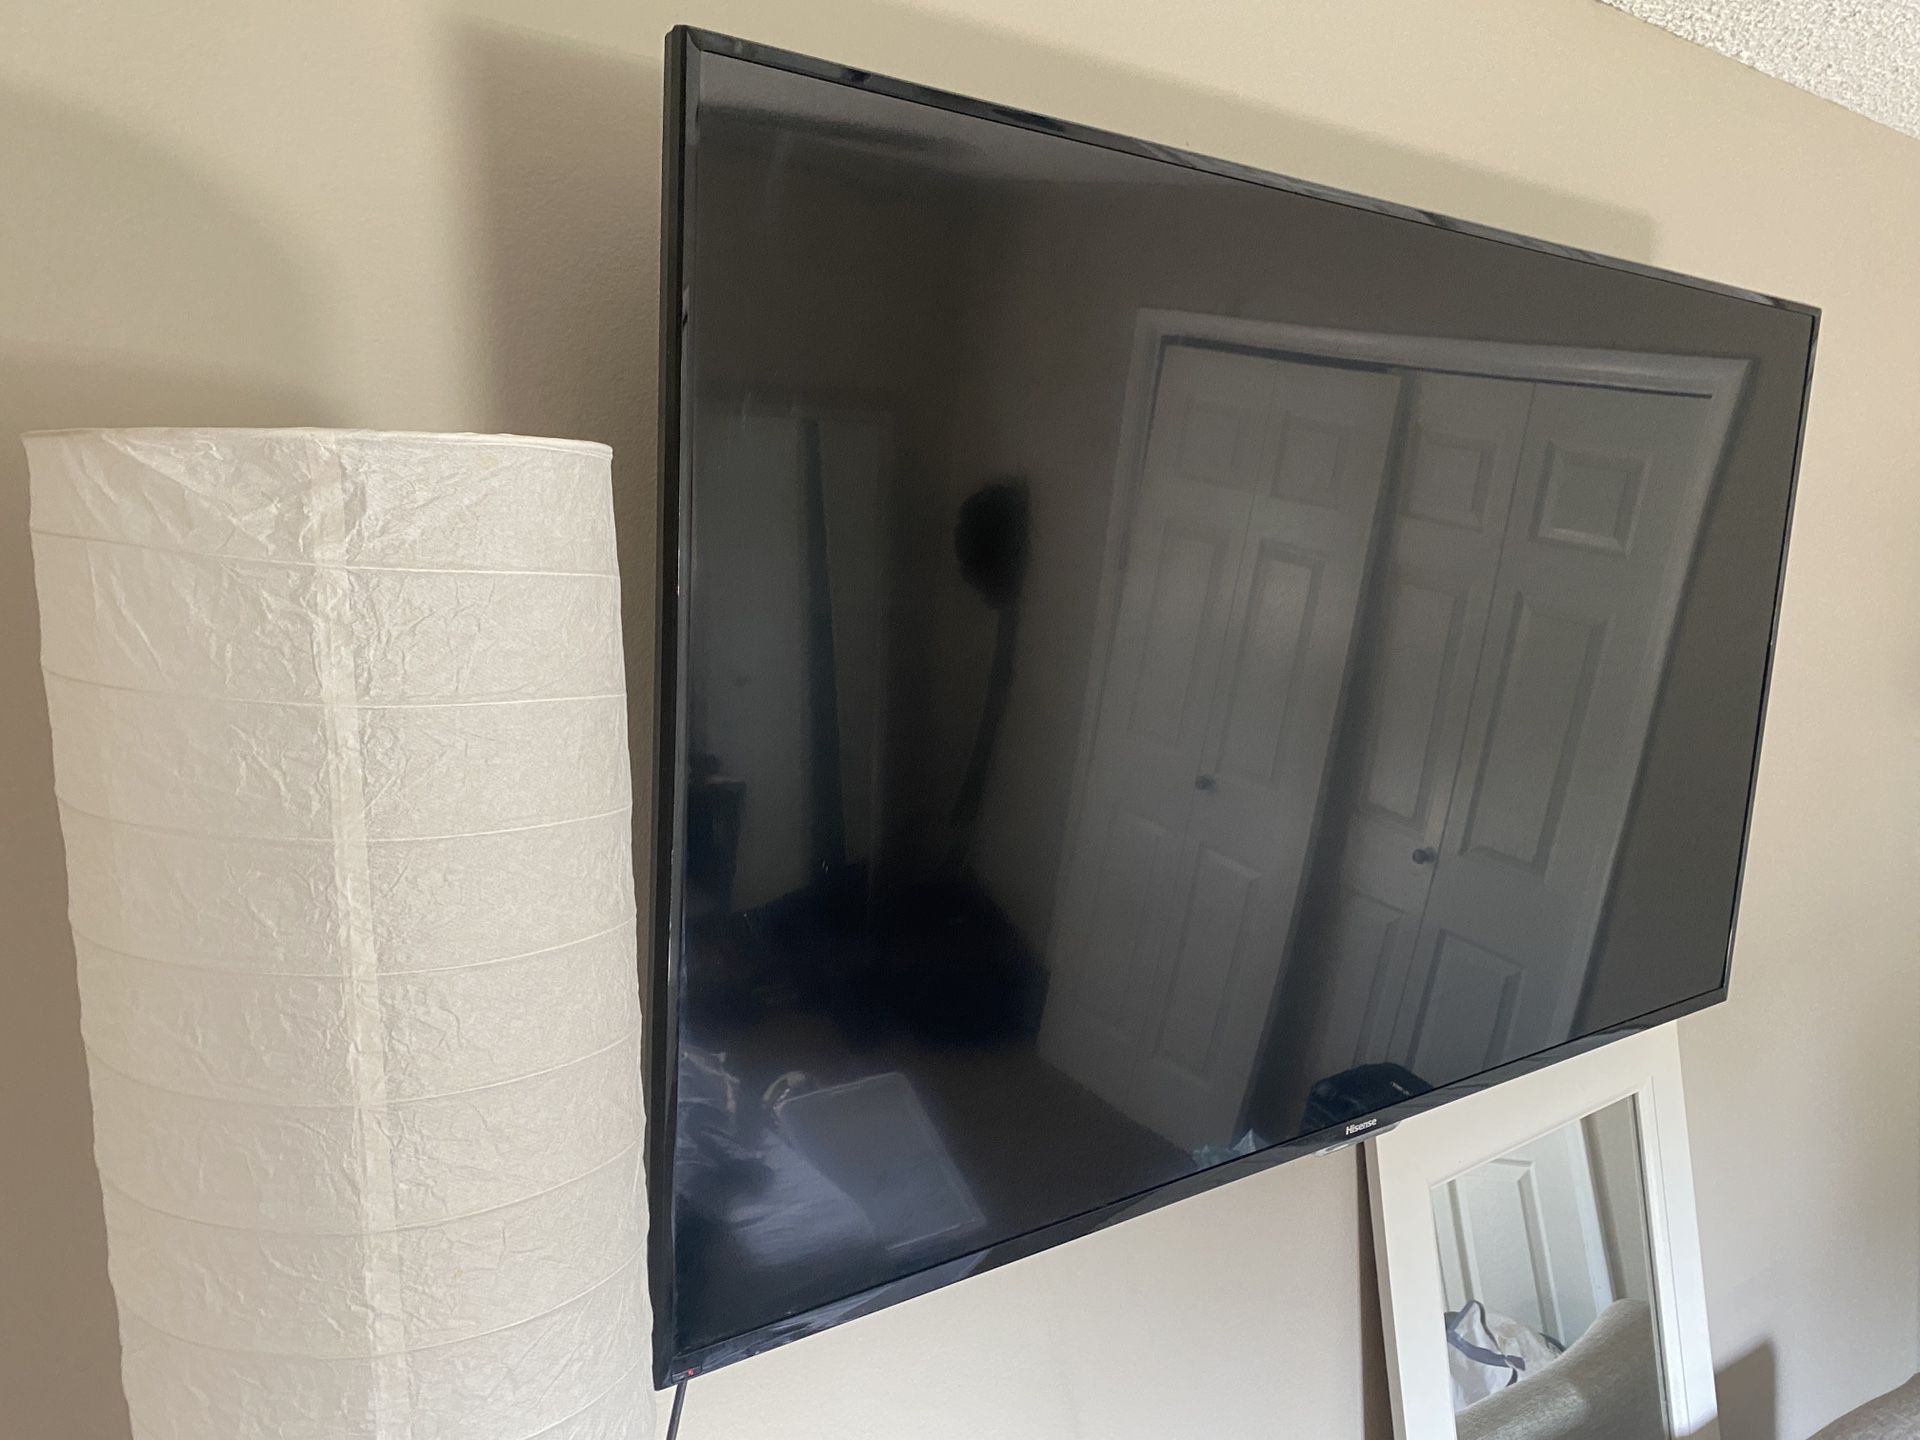 55 “ inch TV